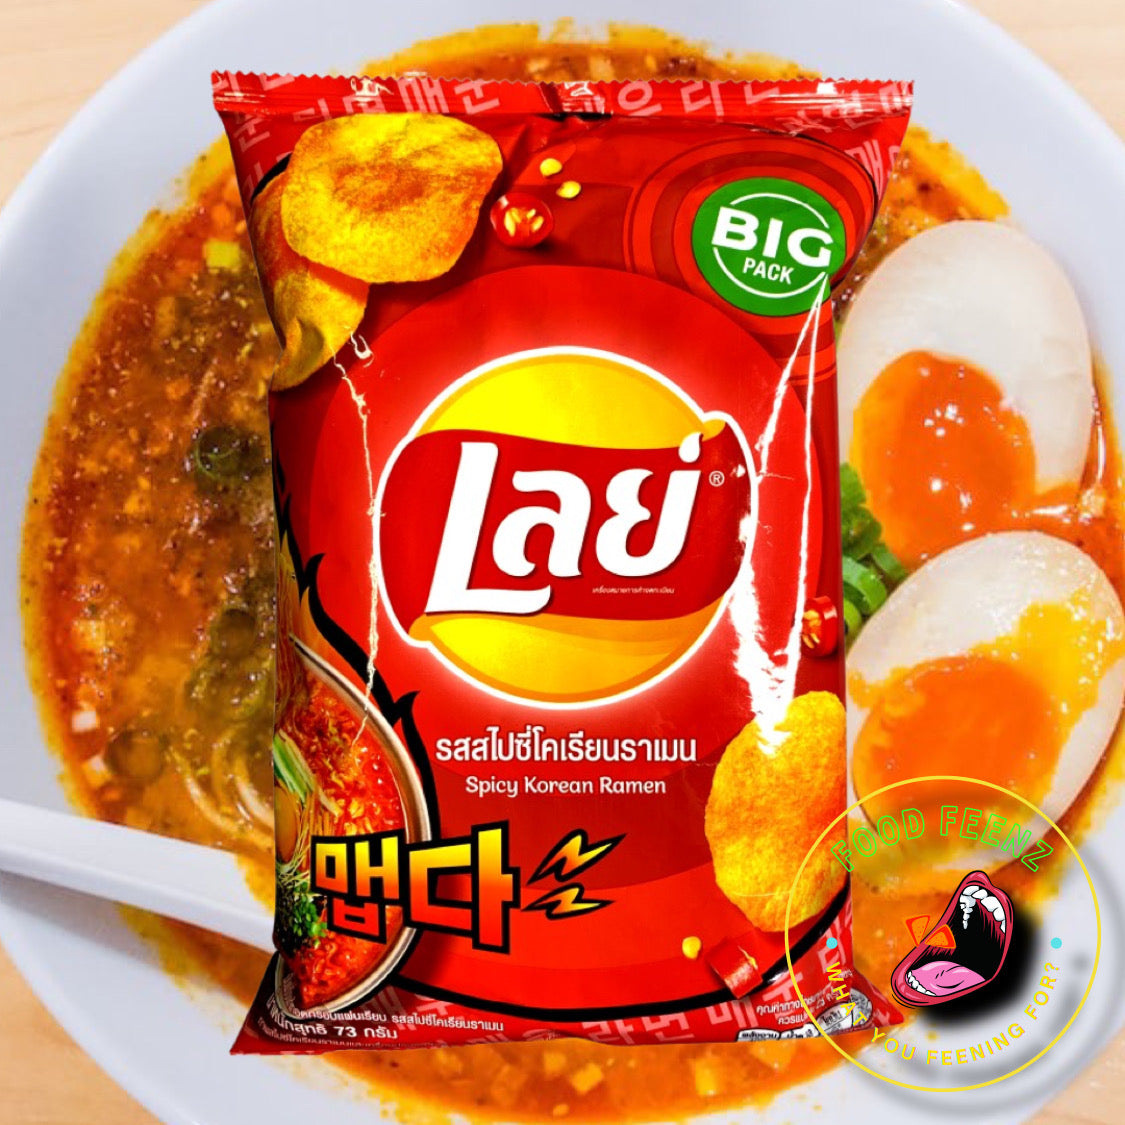 Lay's Spicy Korean Ramen Flavor (Thailand)